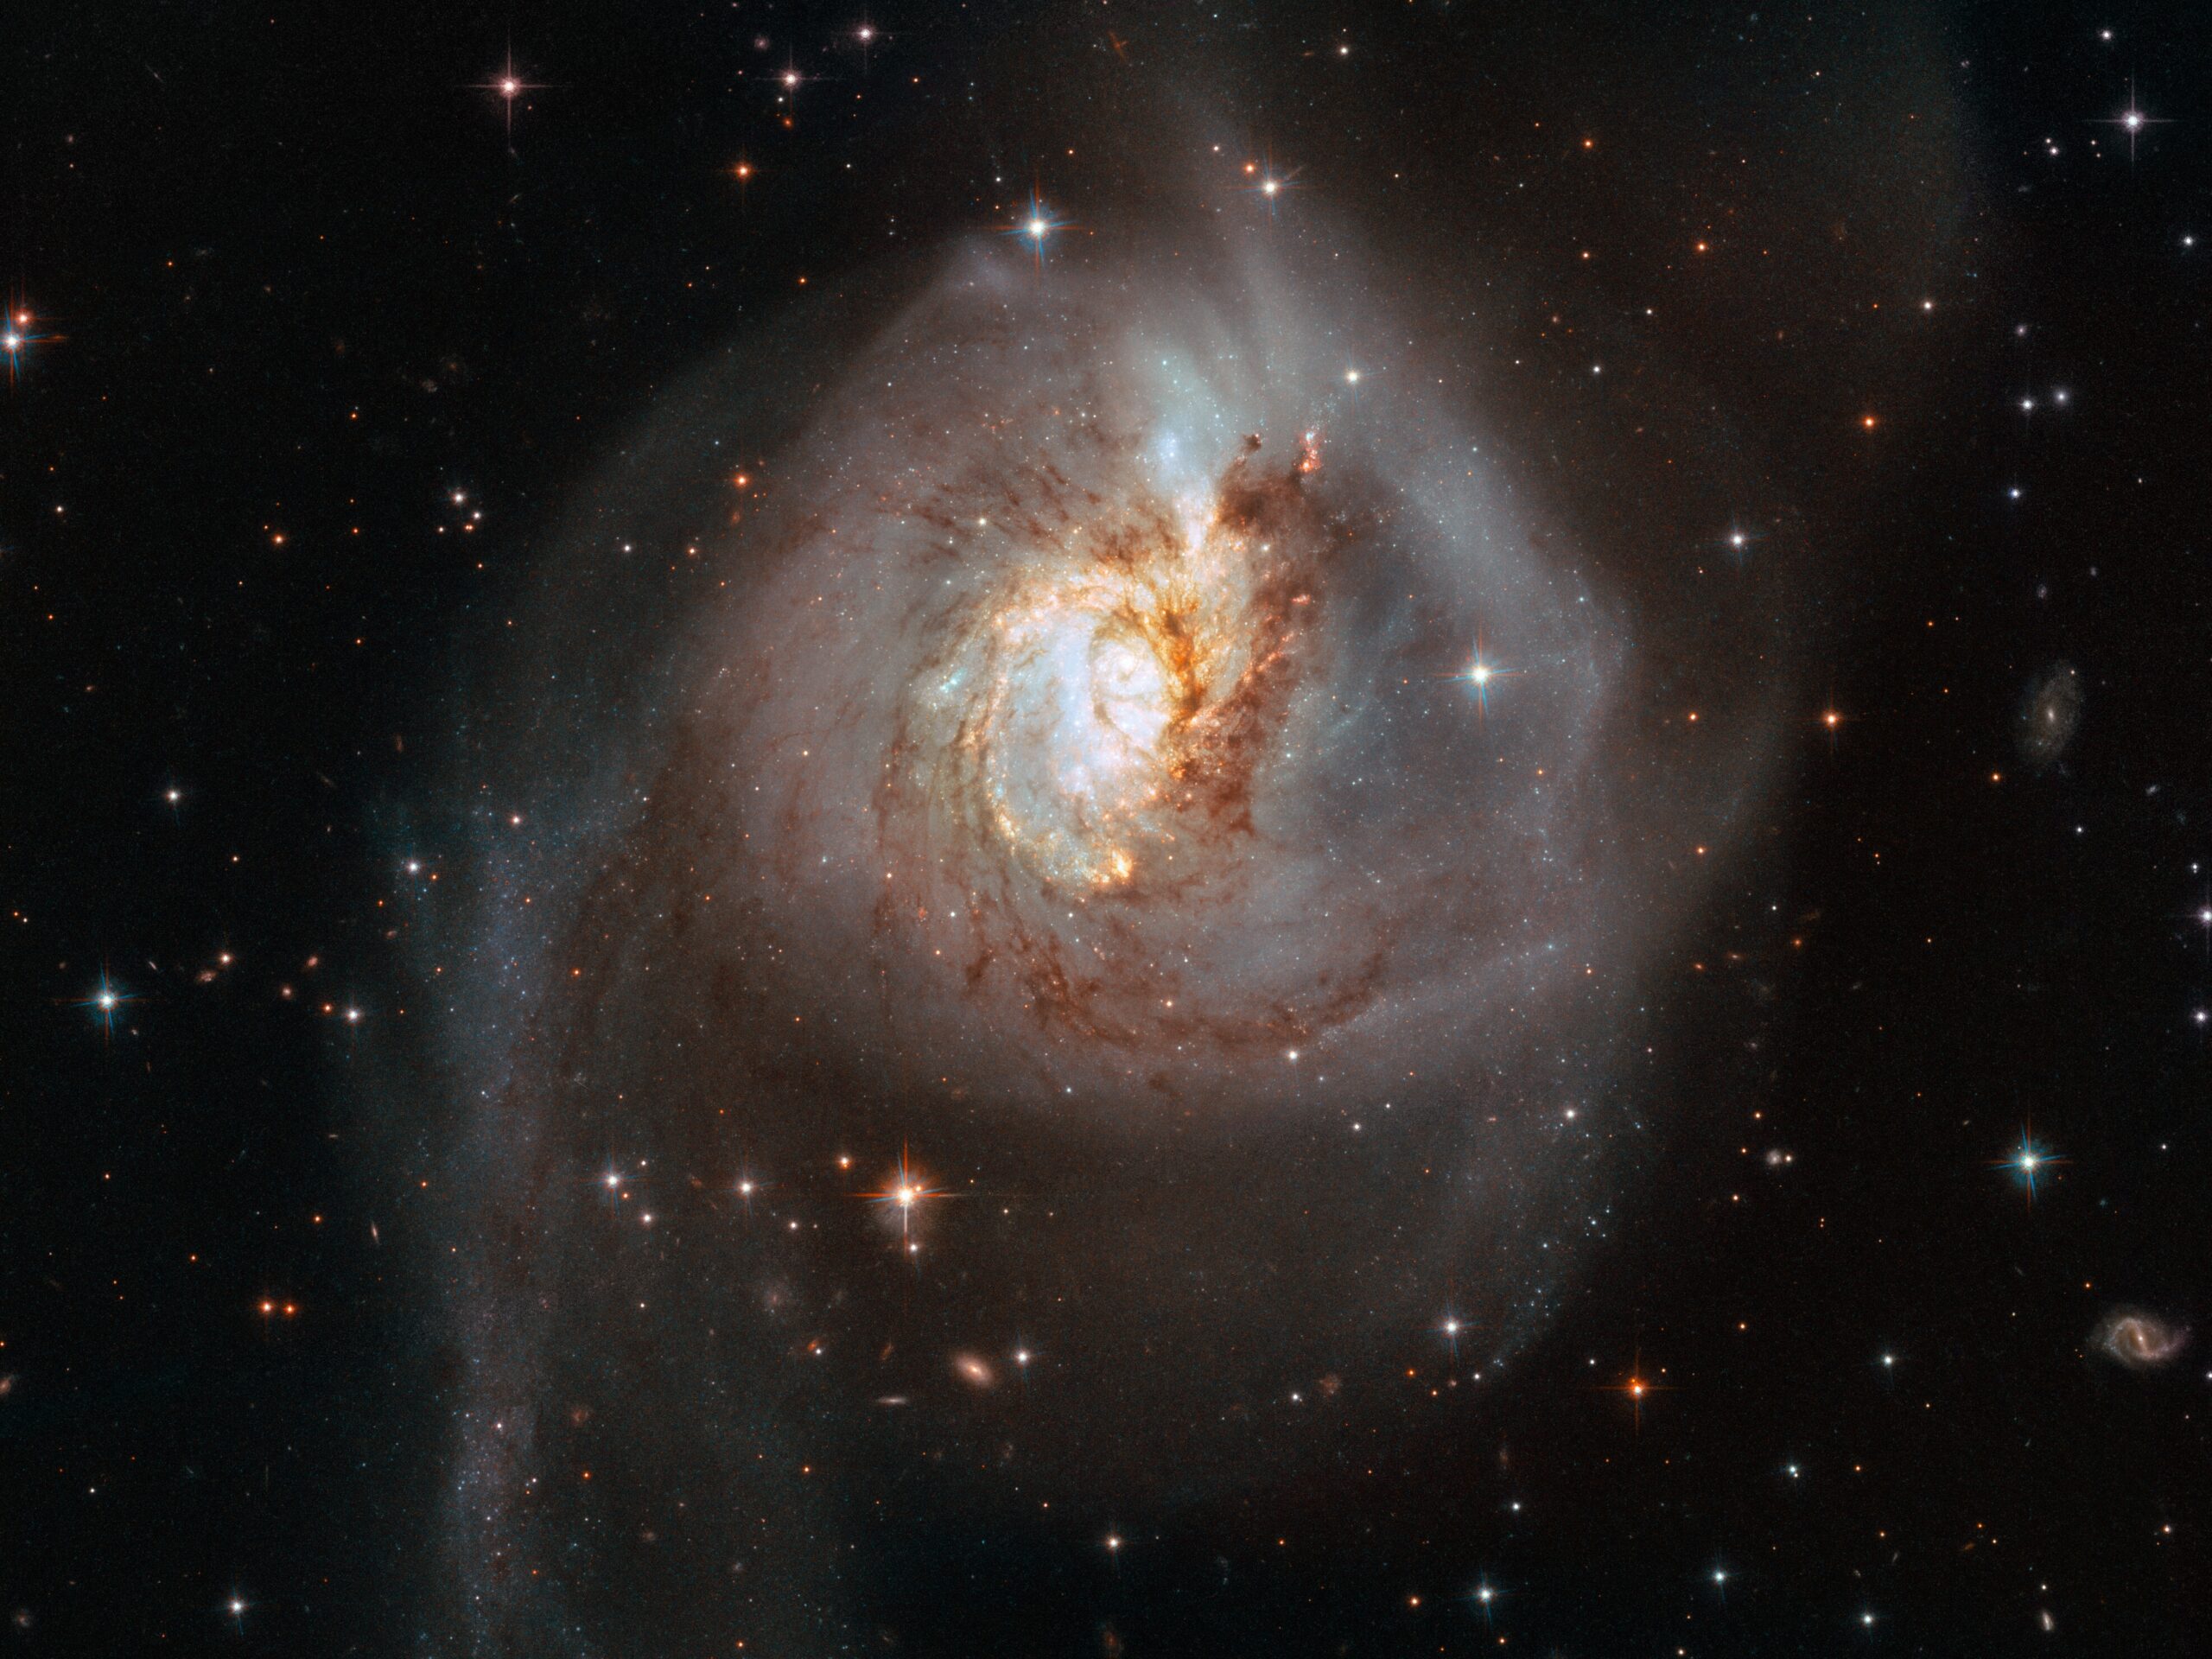 Interacting galaxies seen among stars through a telescope